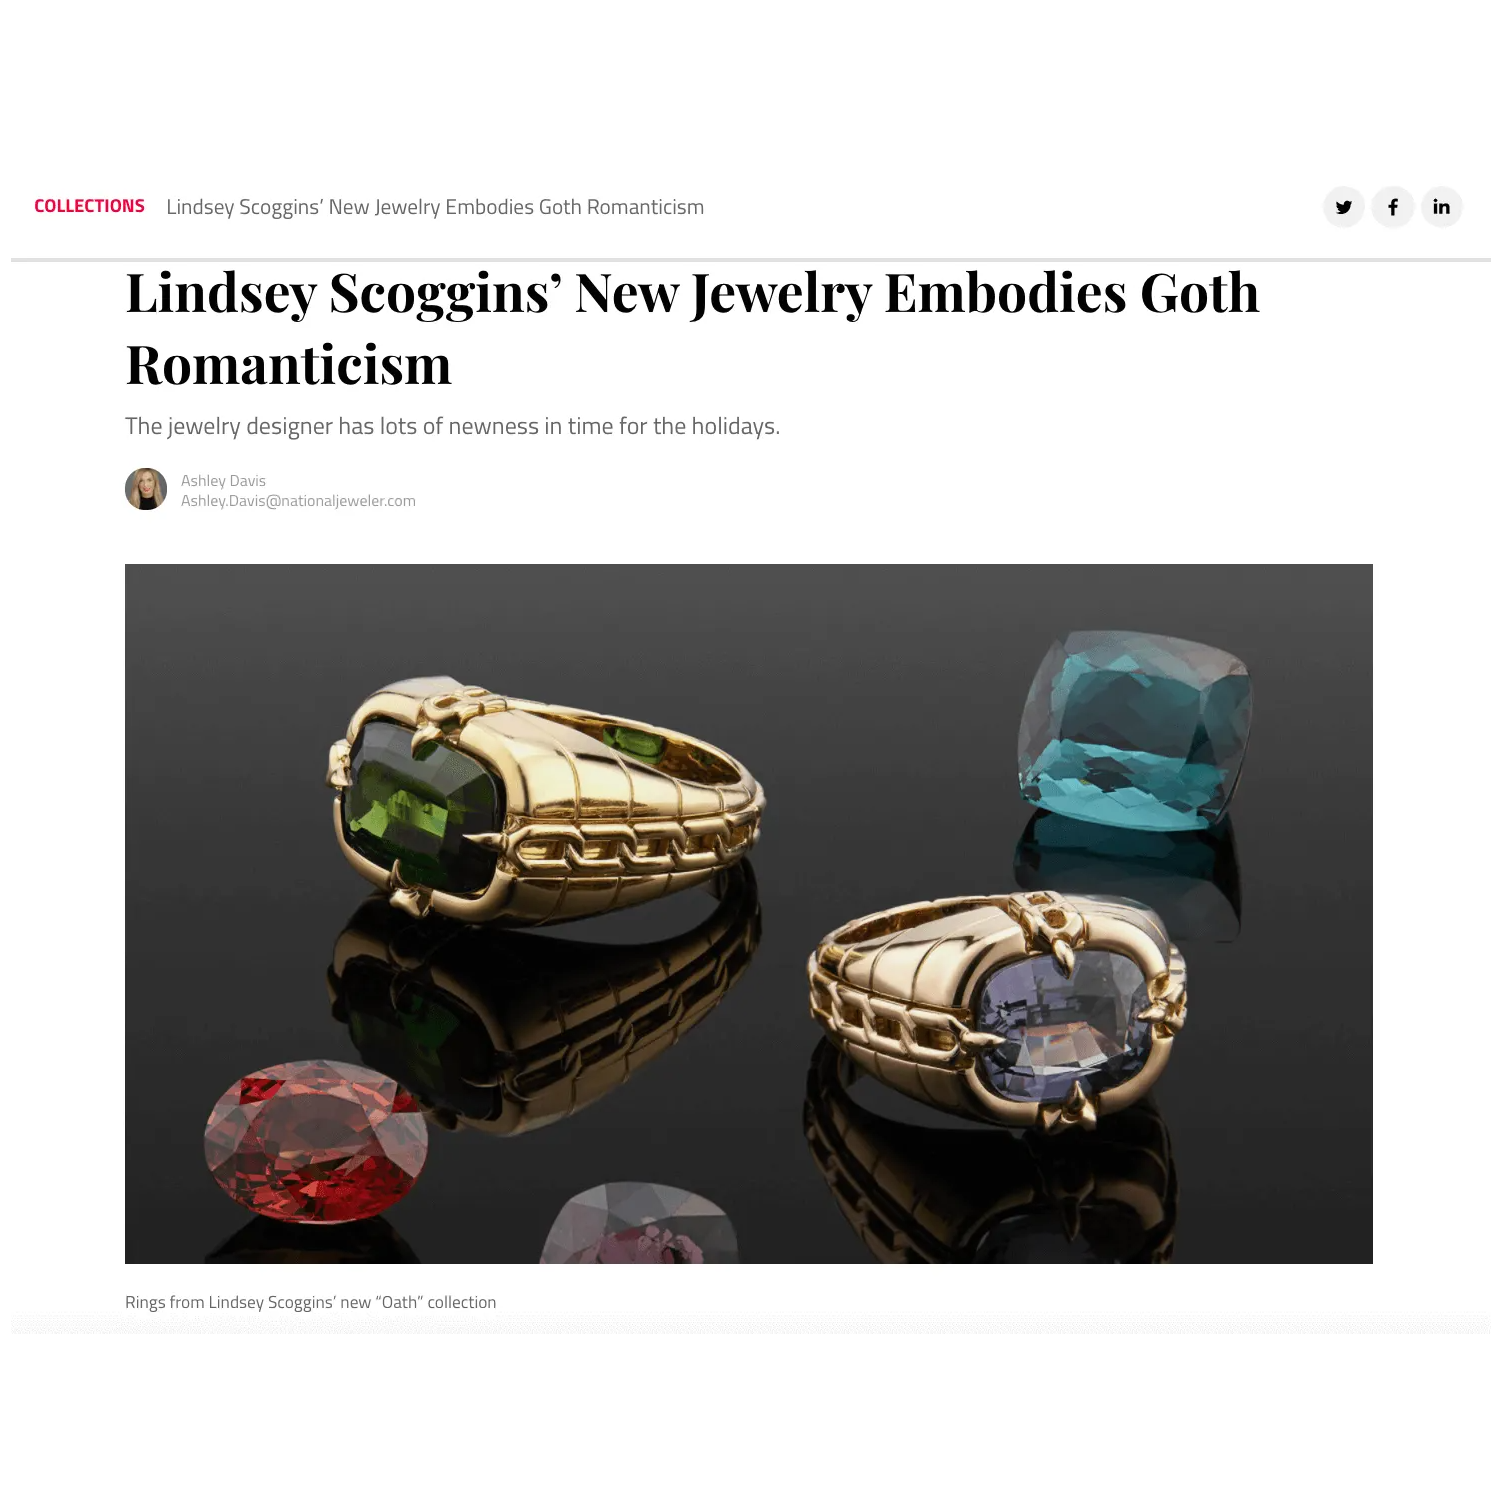 National Jeweler x Lindsey Scoggins Studio